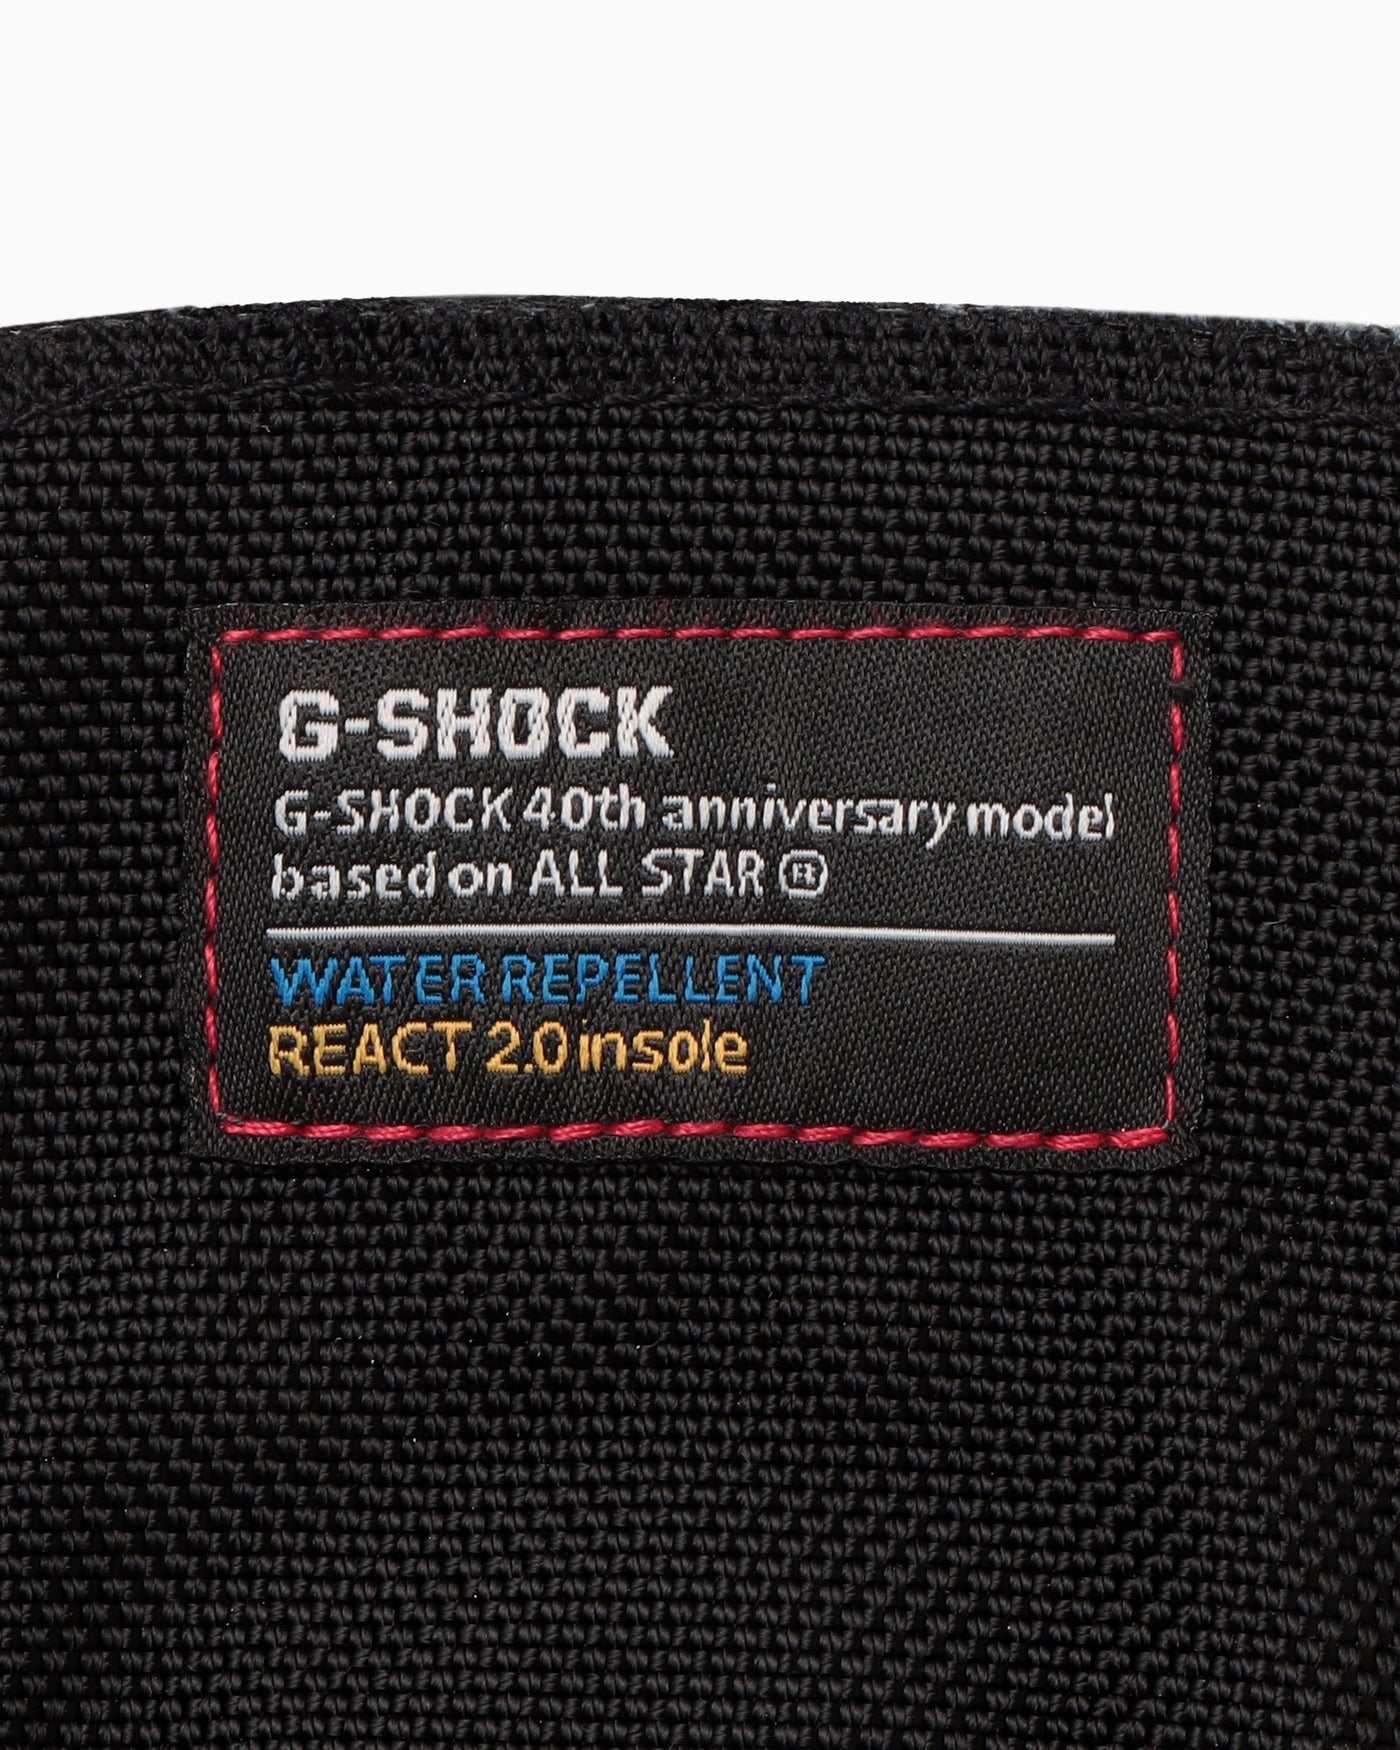 ALL STAR Ⓡ G-SHOCK HI